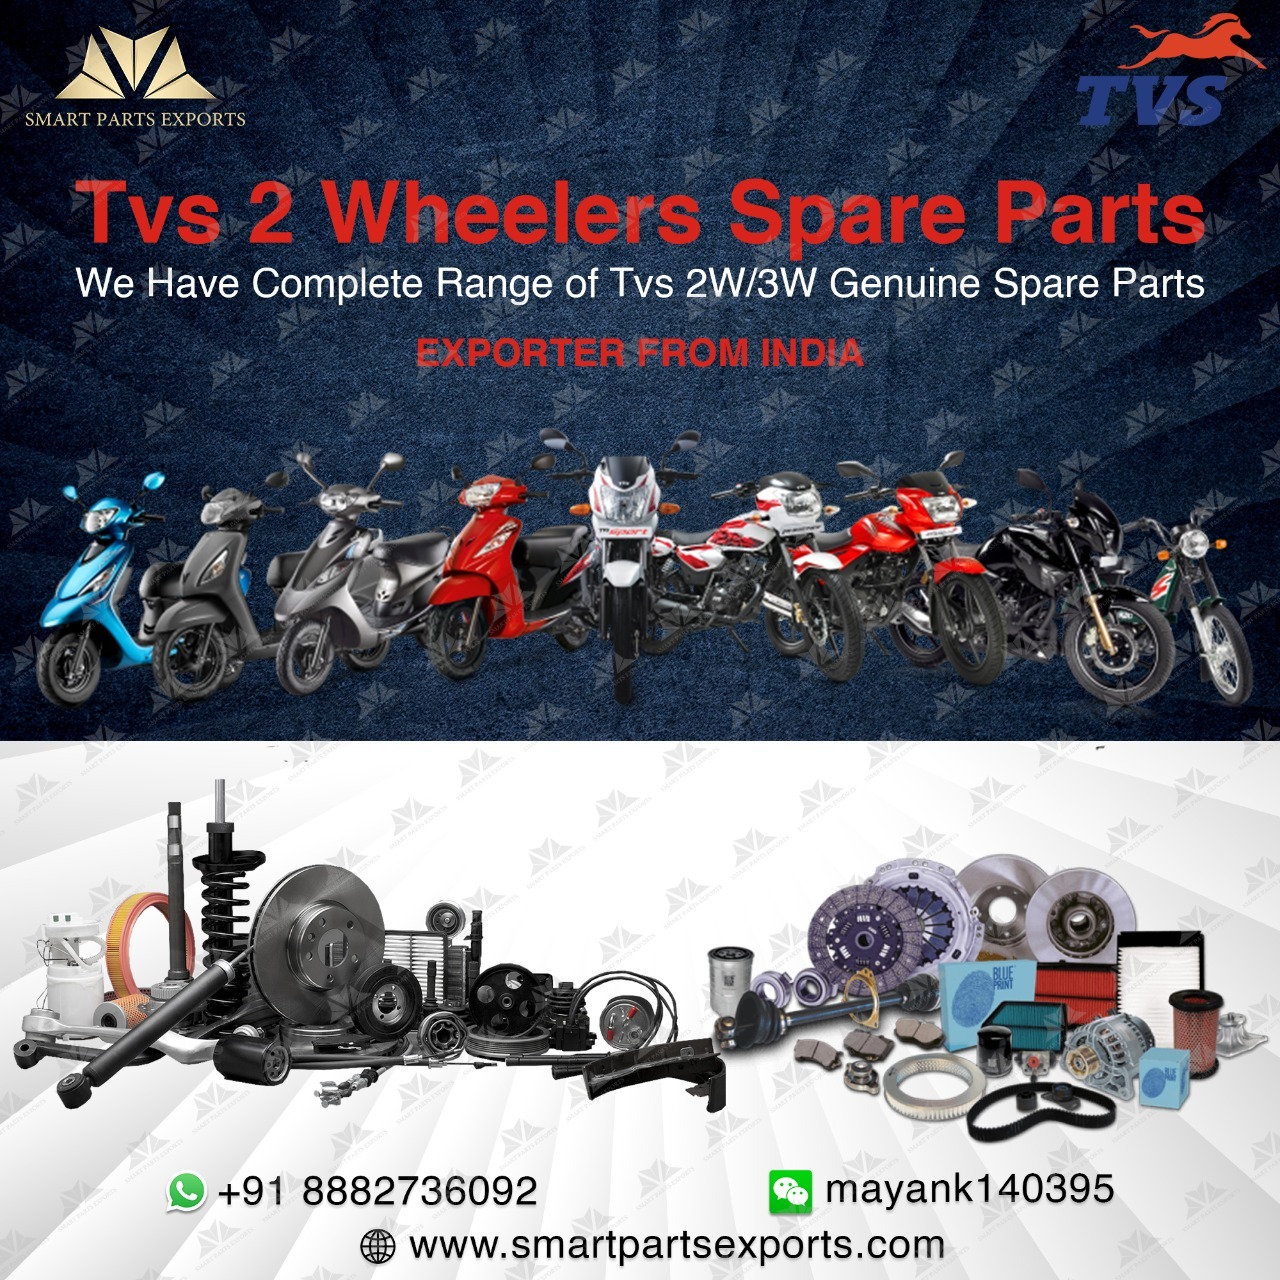 tvs-2-wheelers-spare-parts.jpg